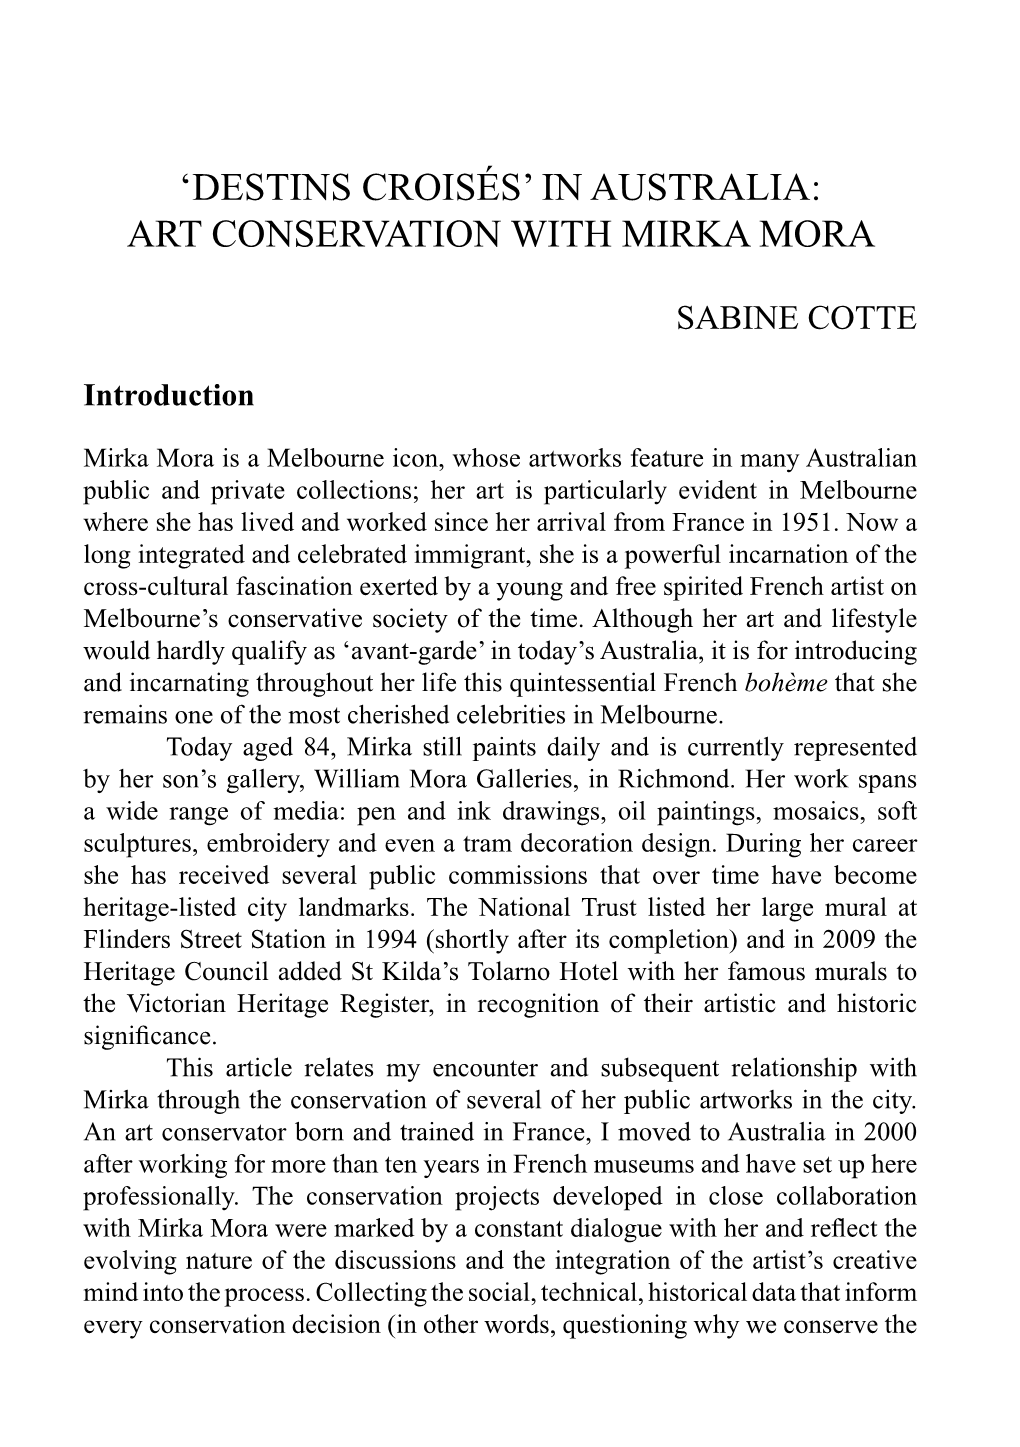 Art Conservation with Mirka Mora